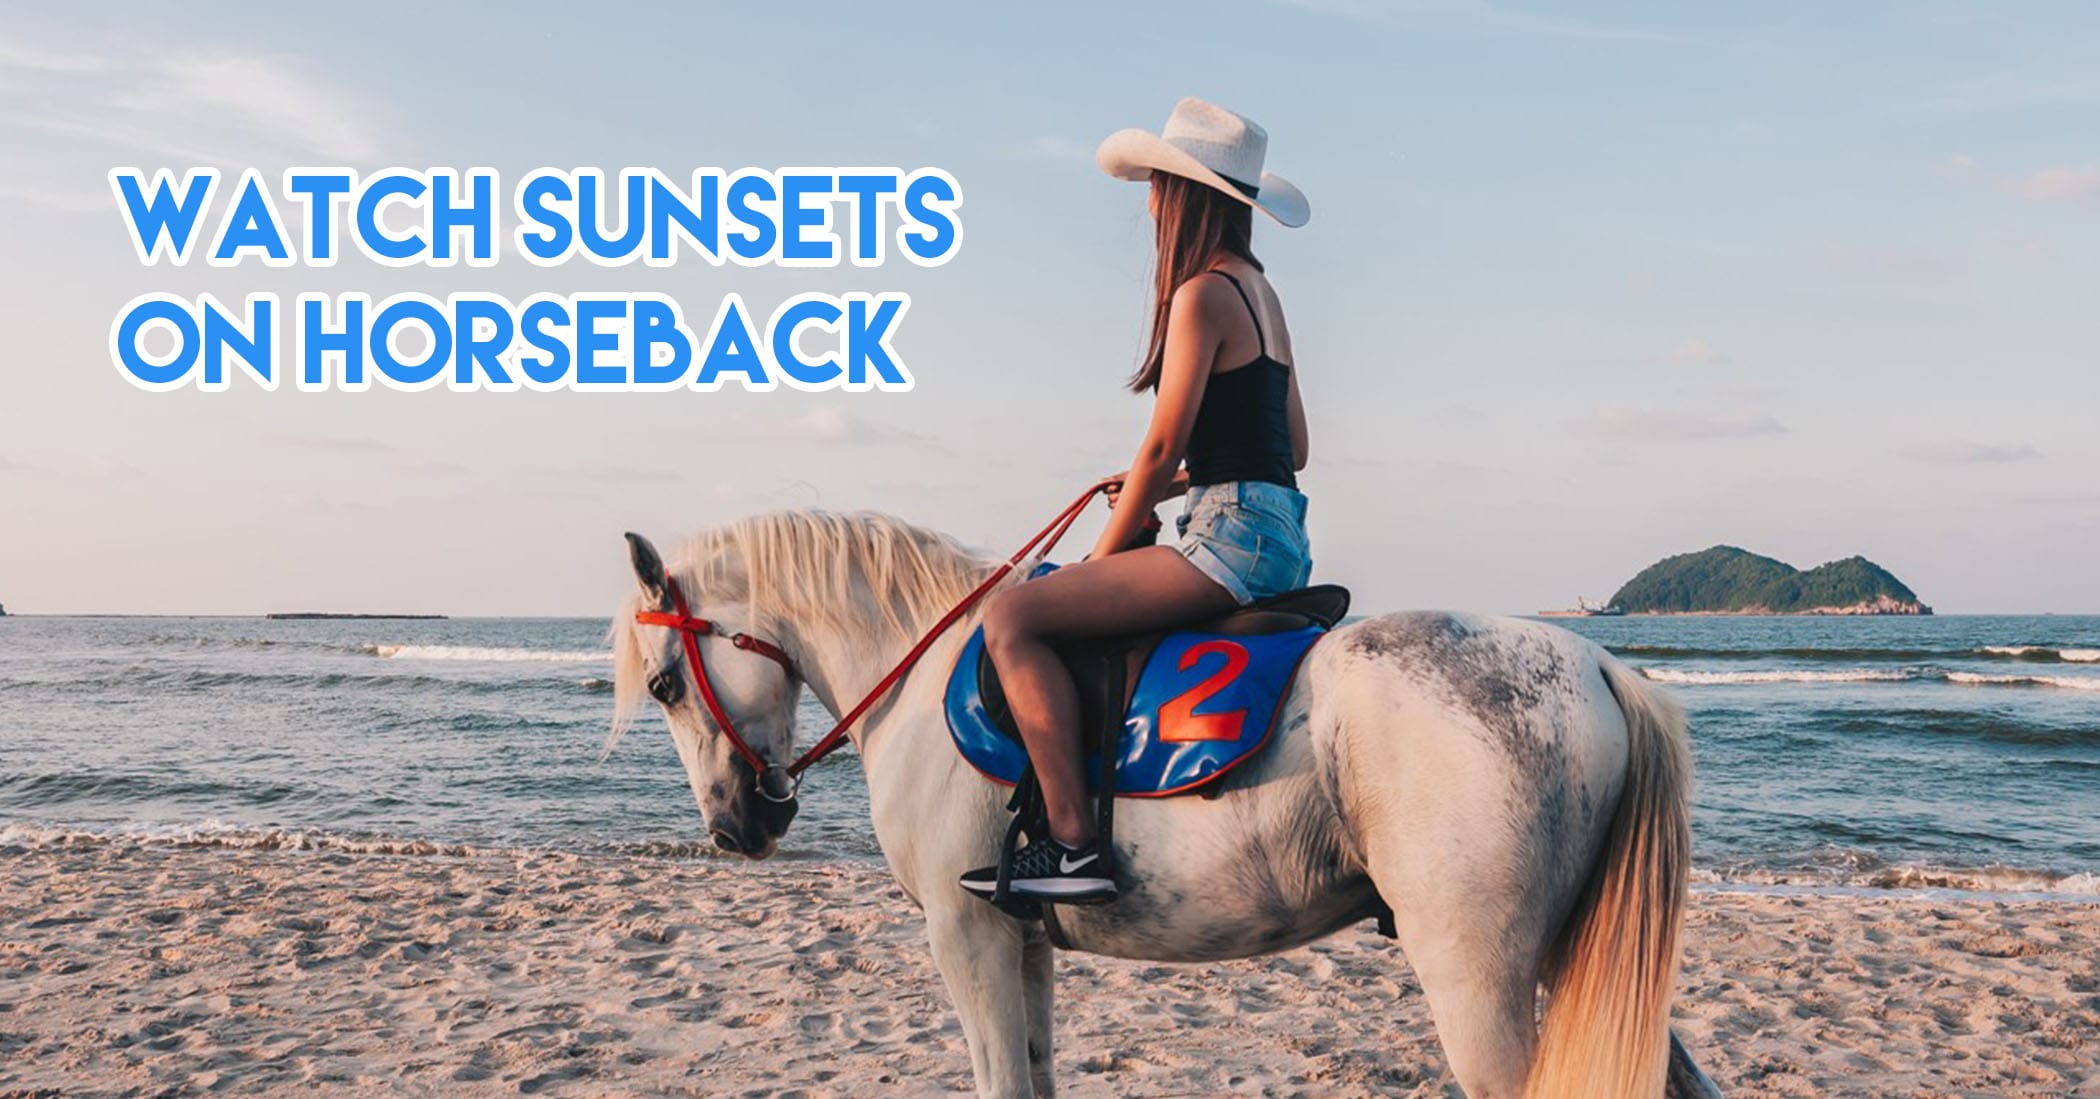 hat yai - watch sunsets on horseback